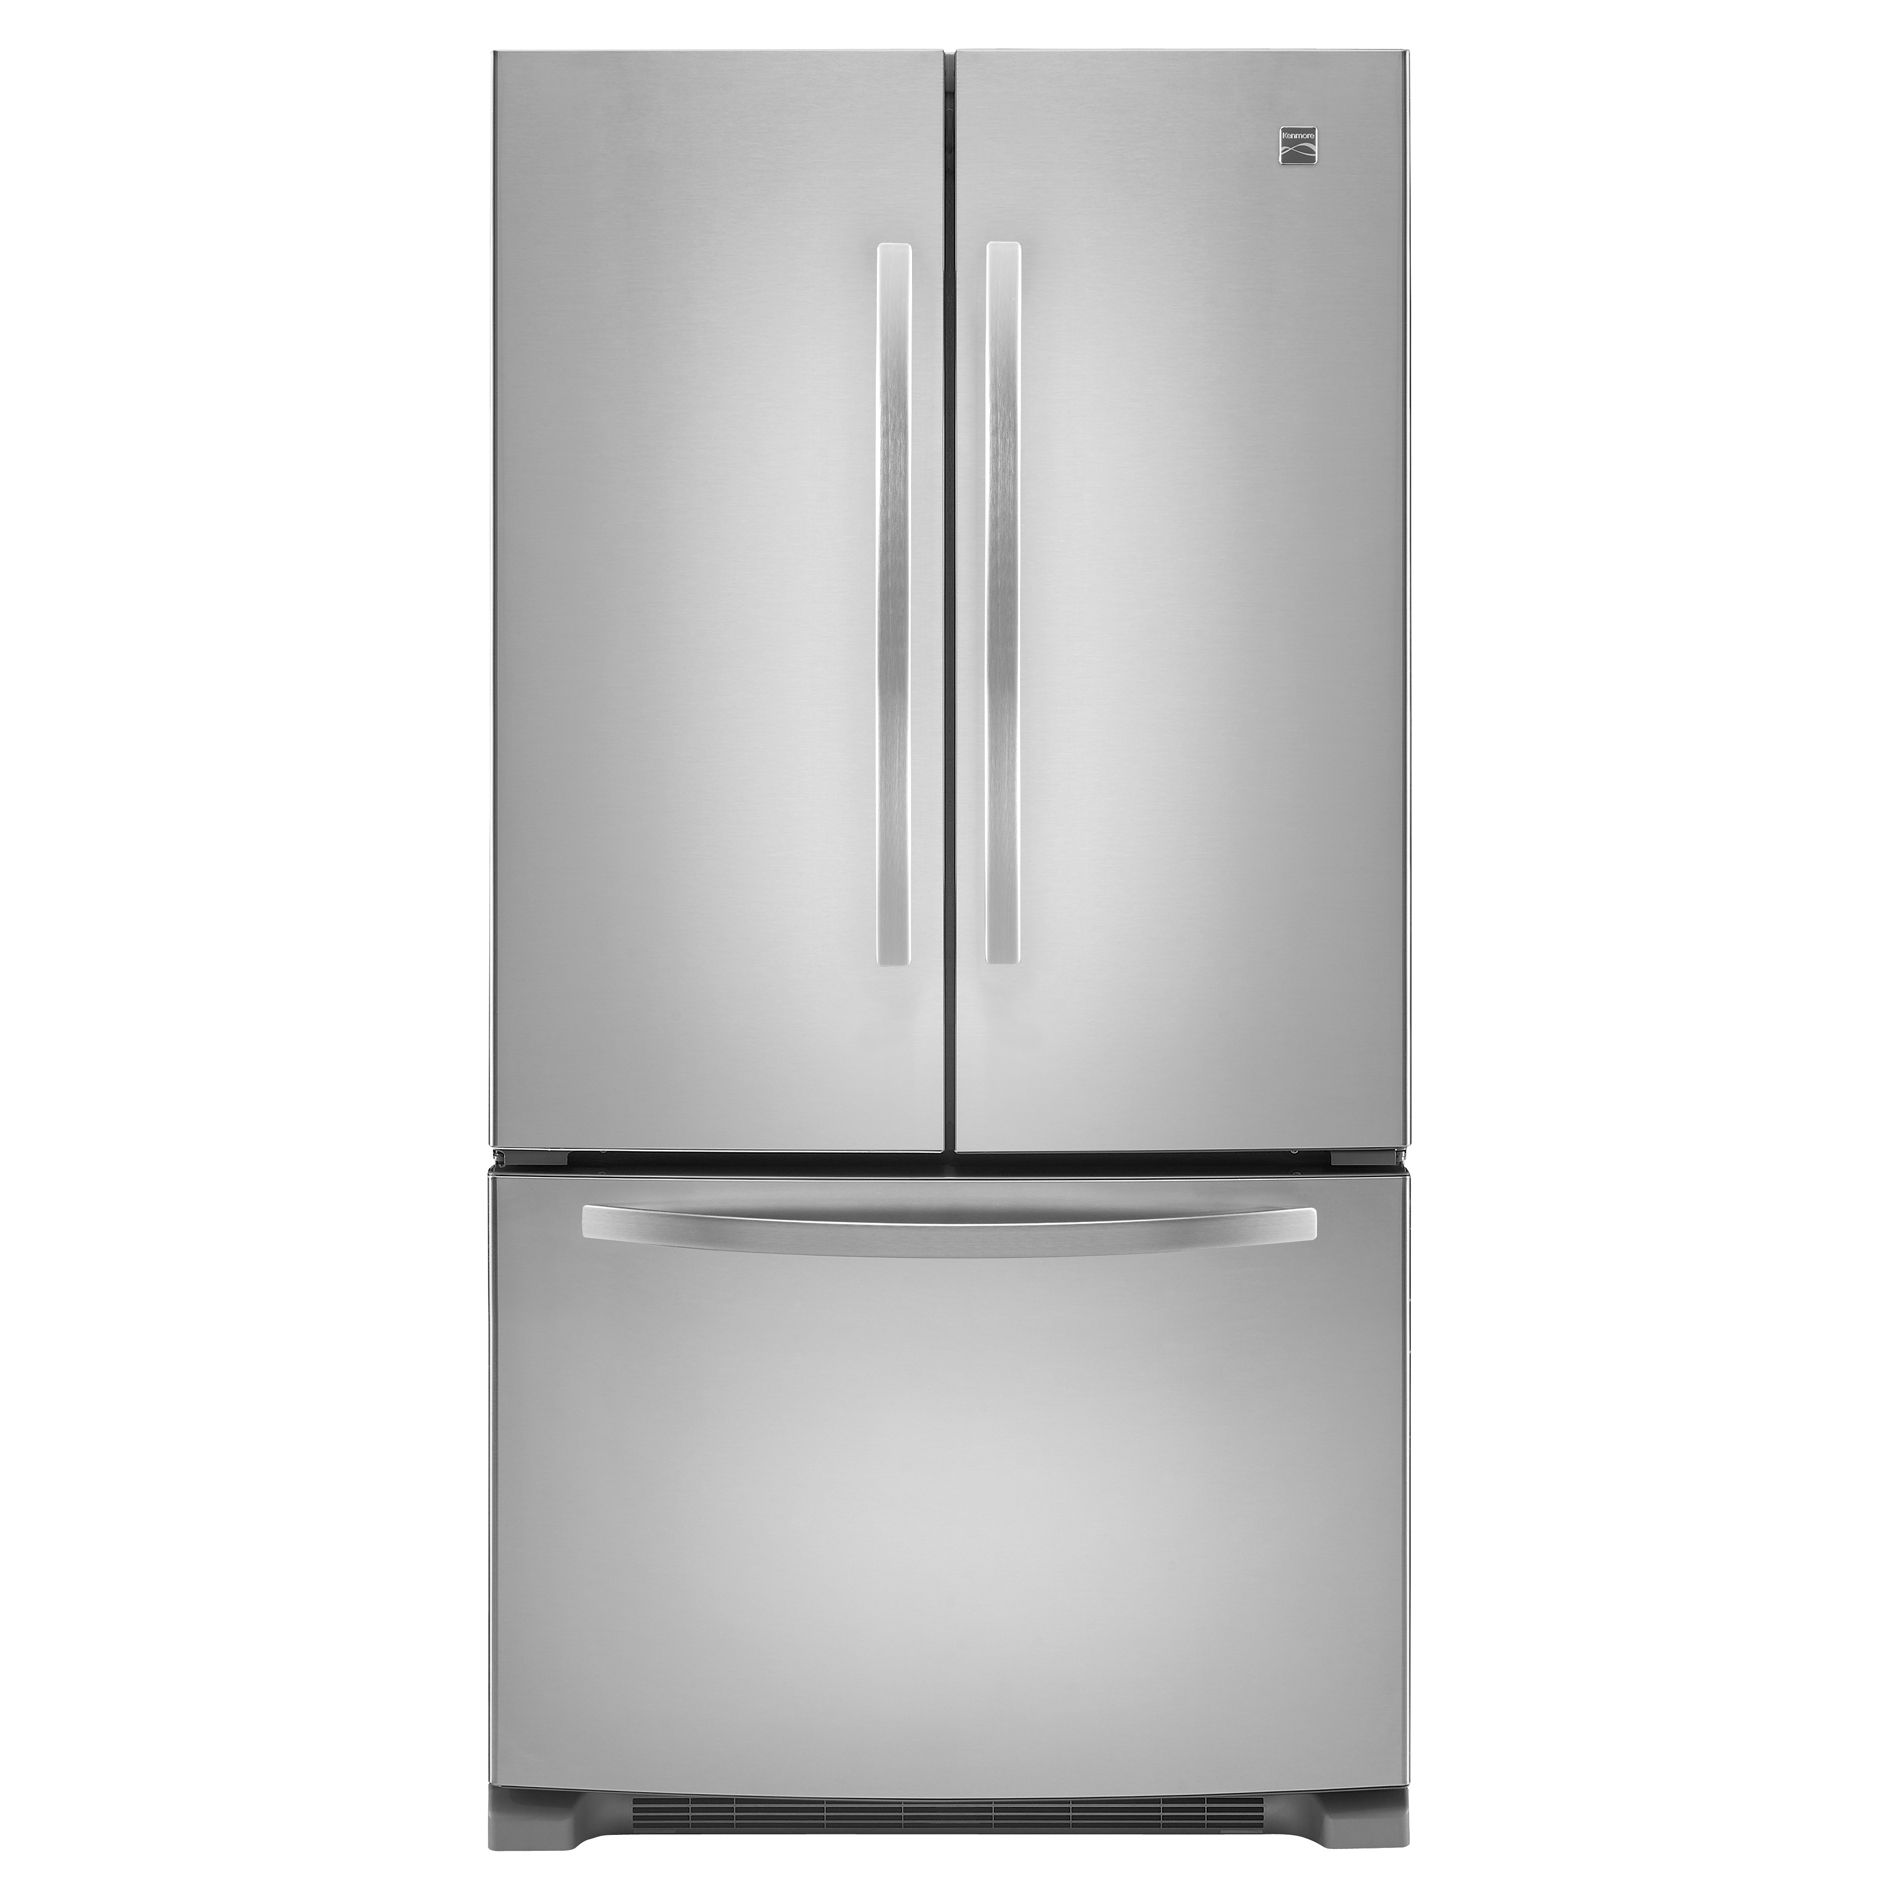 Kenmore 24.8 cu. ft. French-Door Bottom-Freezer Refrigerator Stainless steel